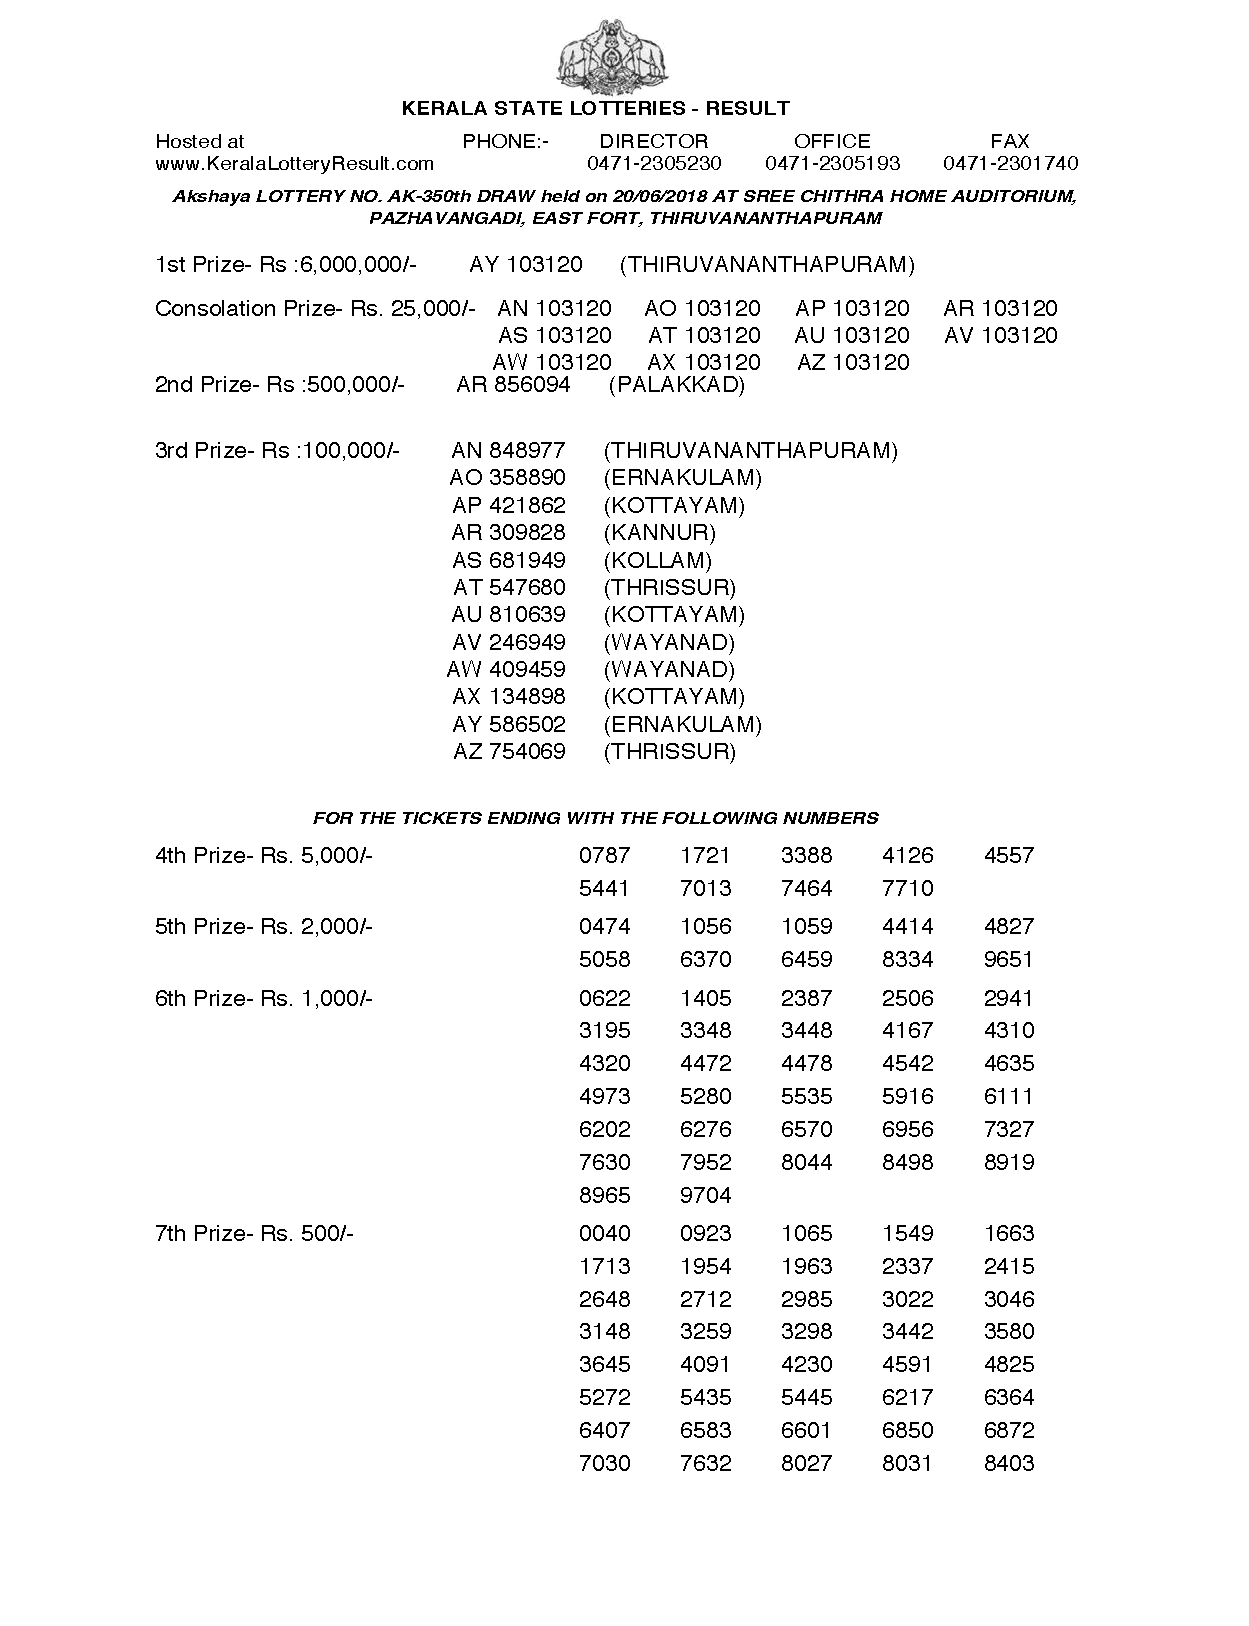 Akshaya AK350 Kerala Lottery Results Screenshot: Page 1